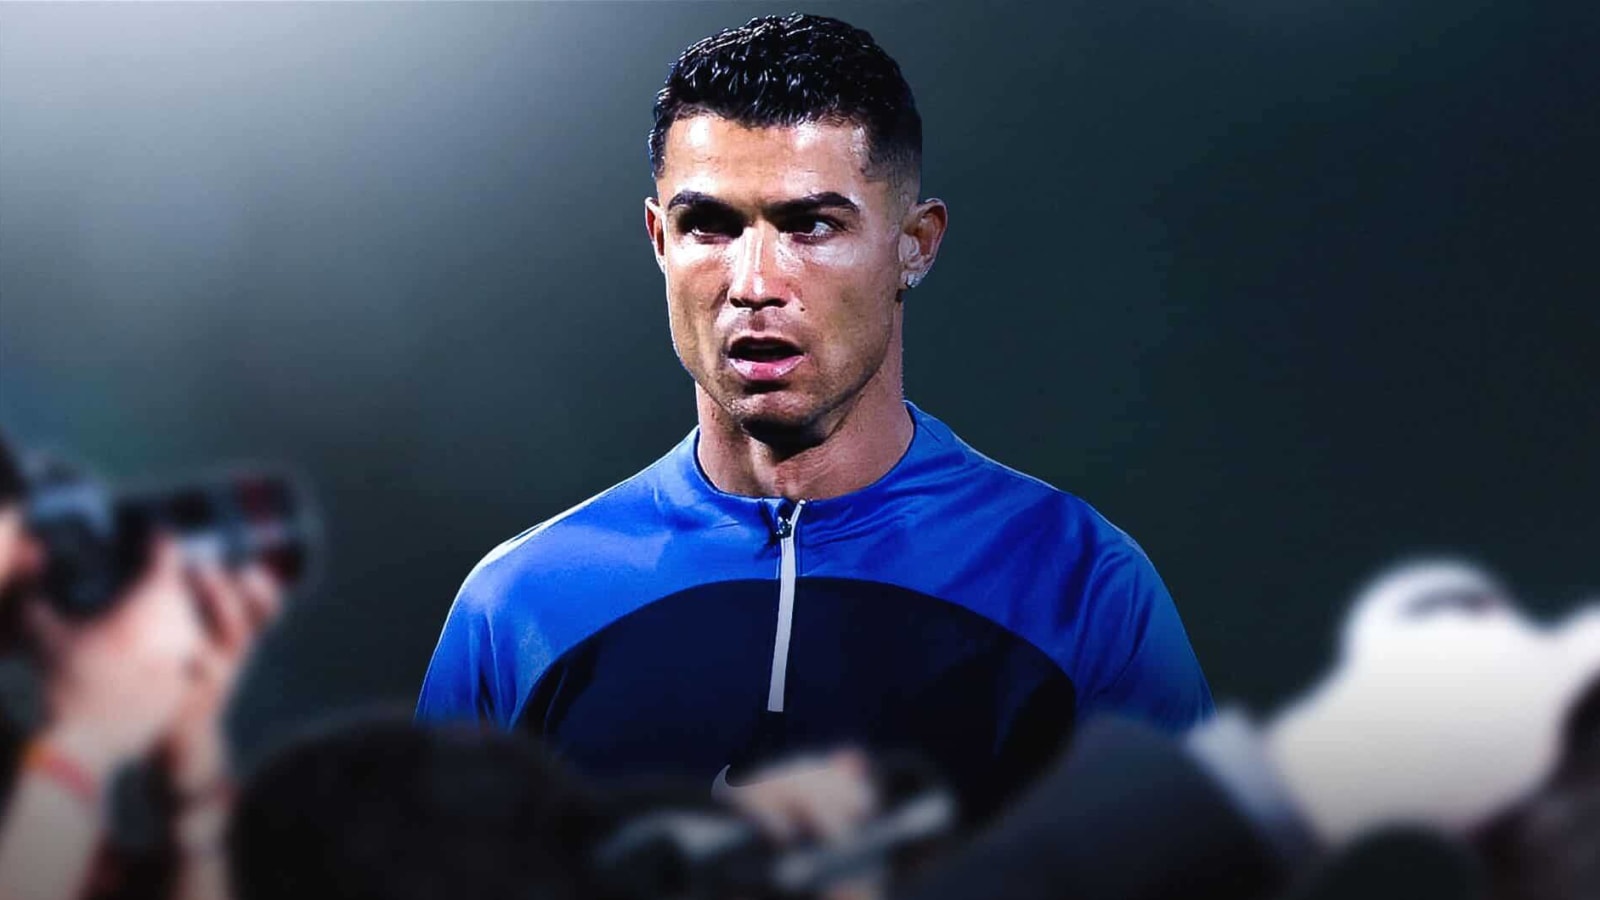 Al Nassr’s Cristiano Ronaldo officially lifts lid on retirement rumors